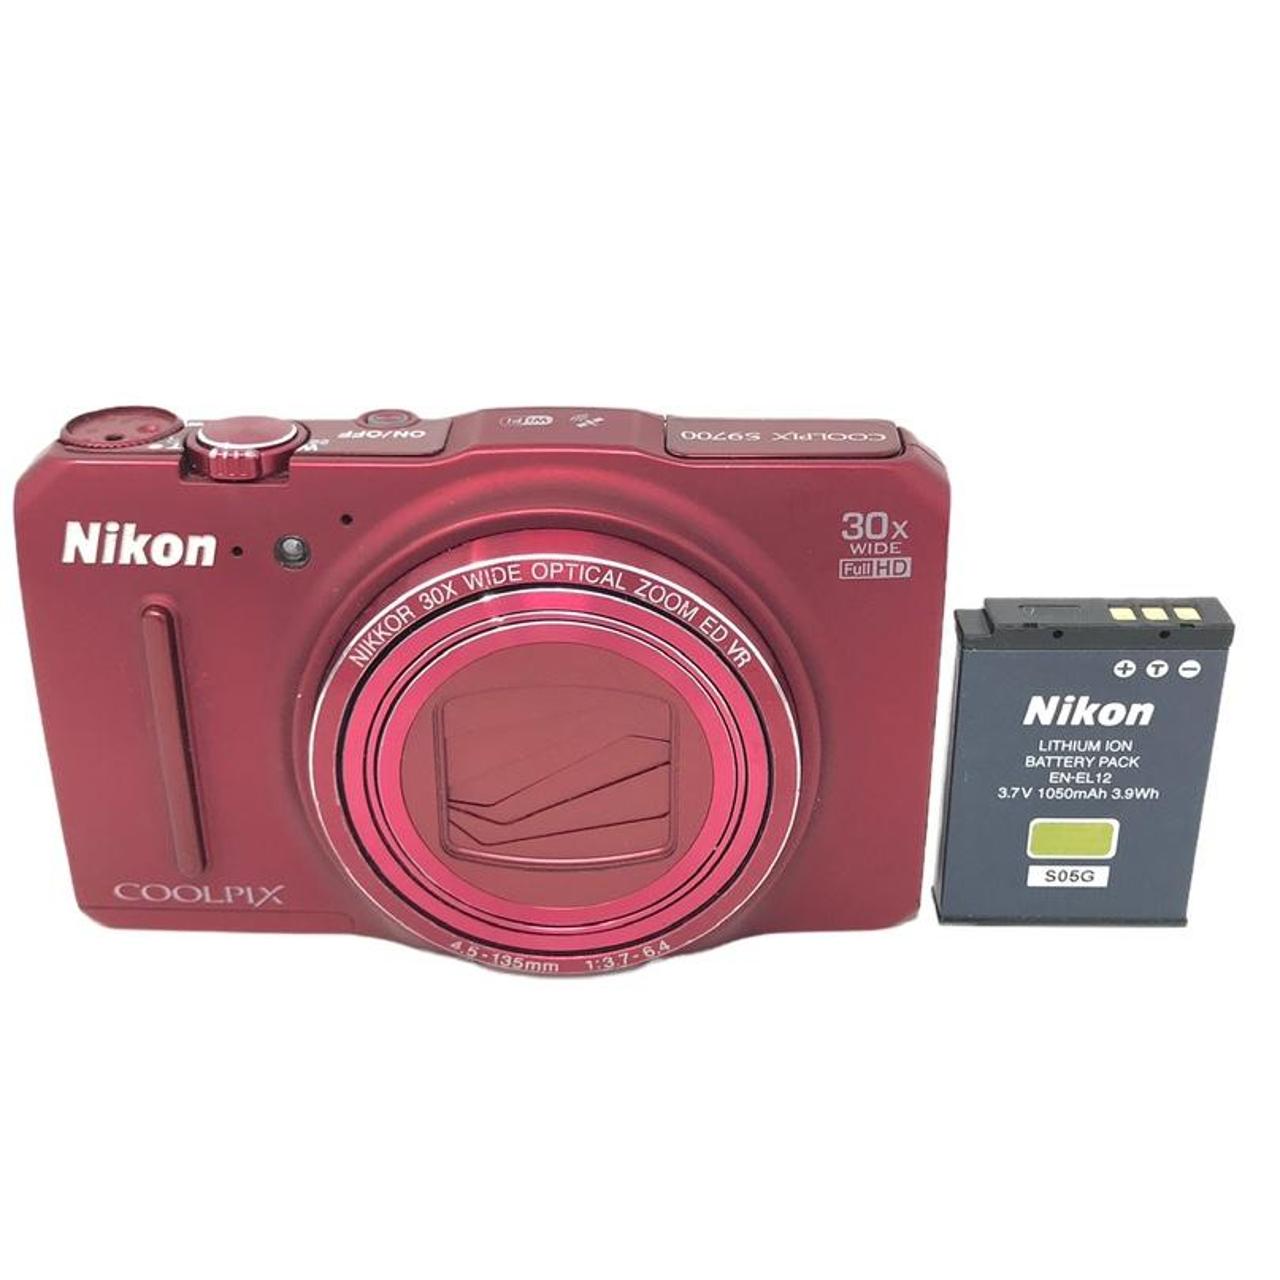 Product Image 1 - Nikon Coolpix s9700 Digital Camera